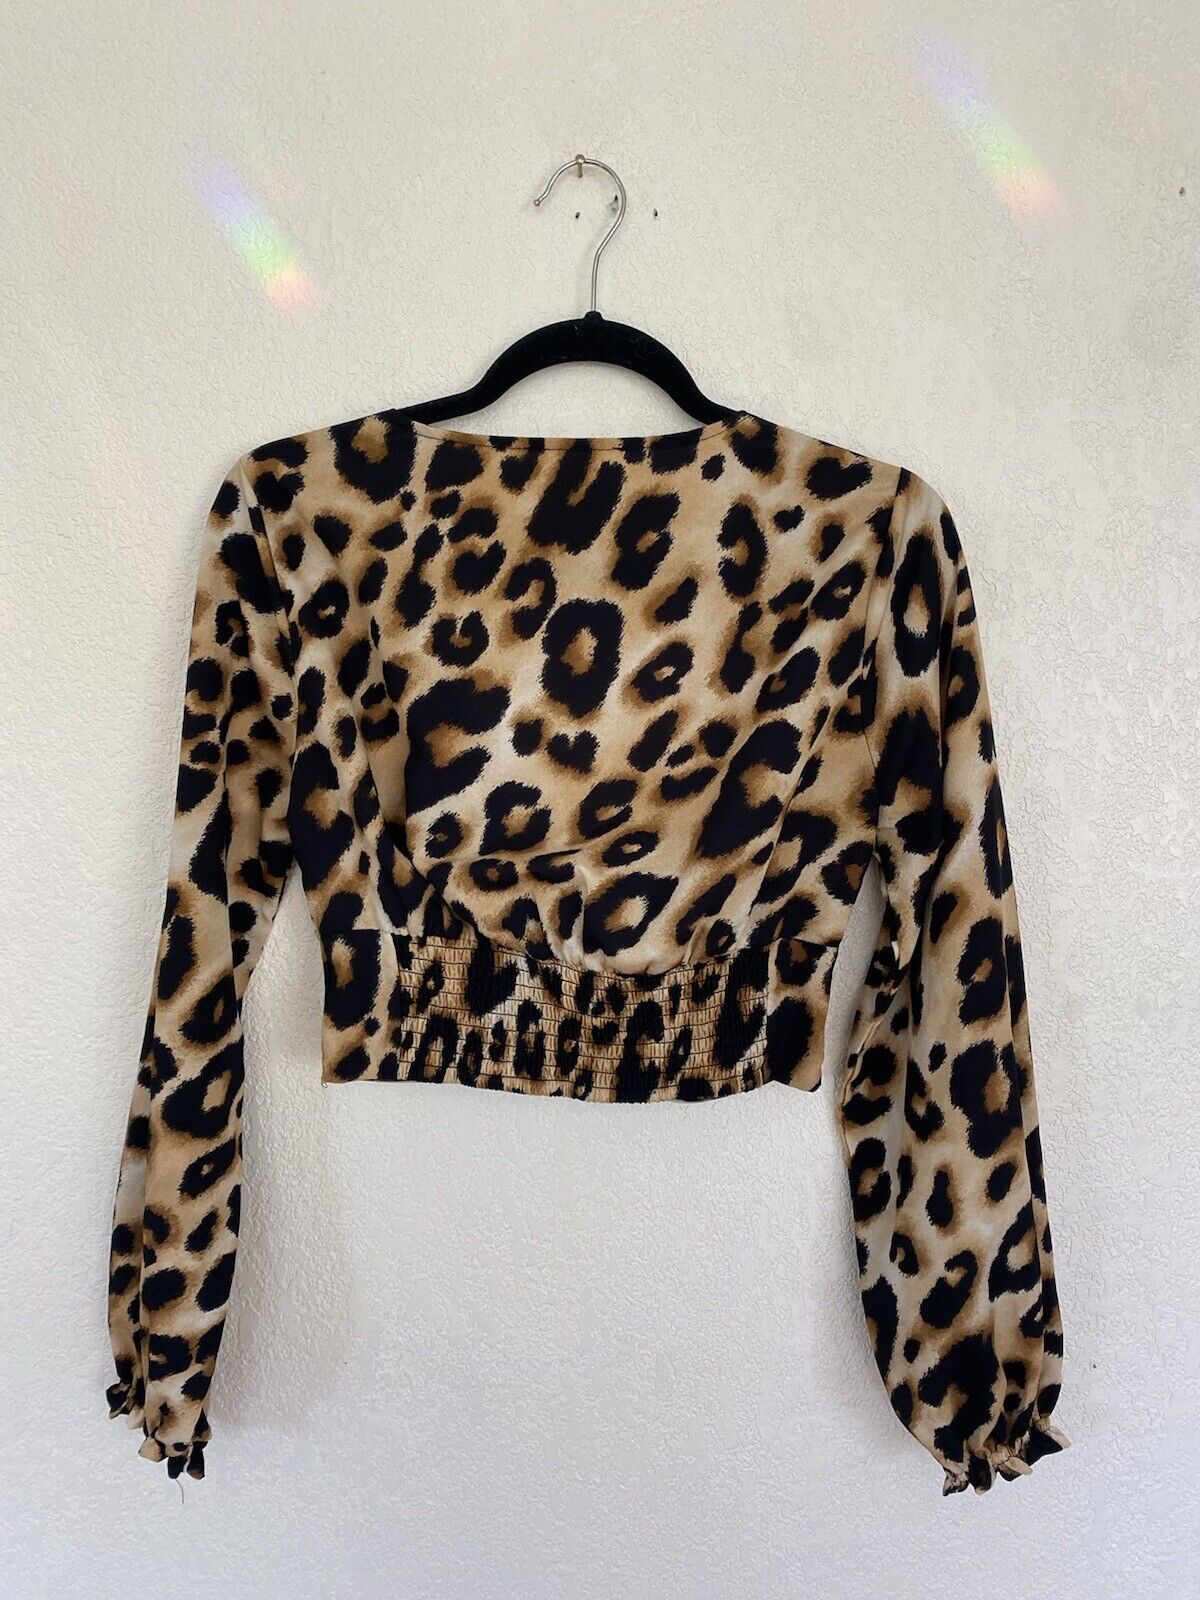 Leopard Print Long Sleeve Shirt - Unbranded - Women’s Small # 2635